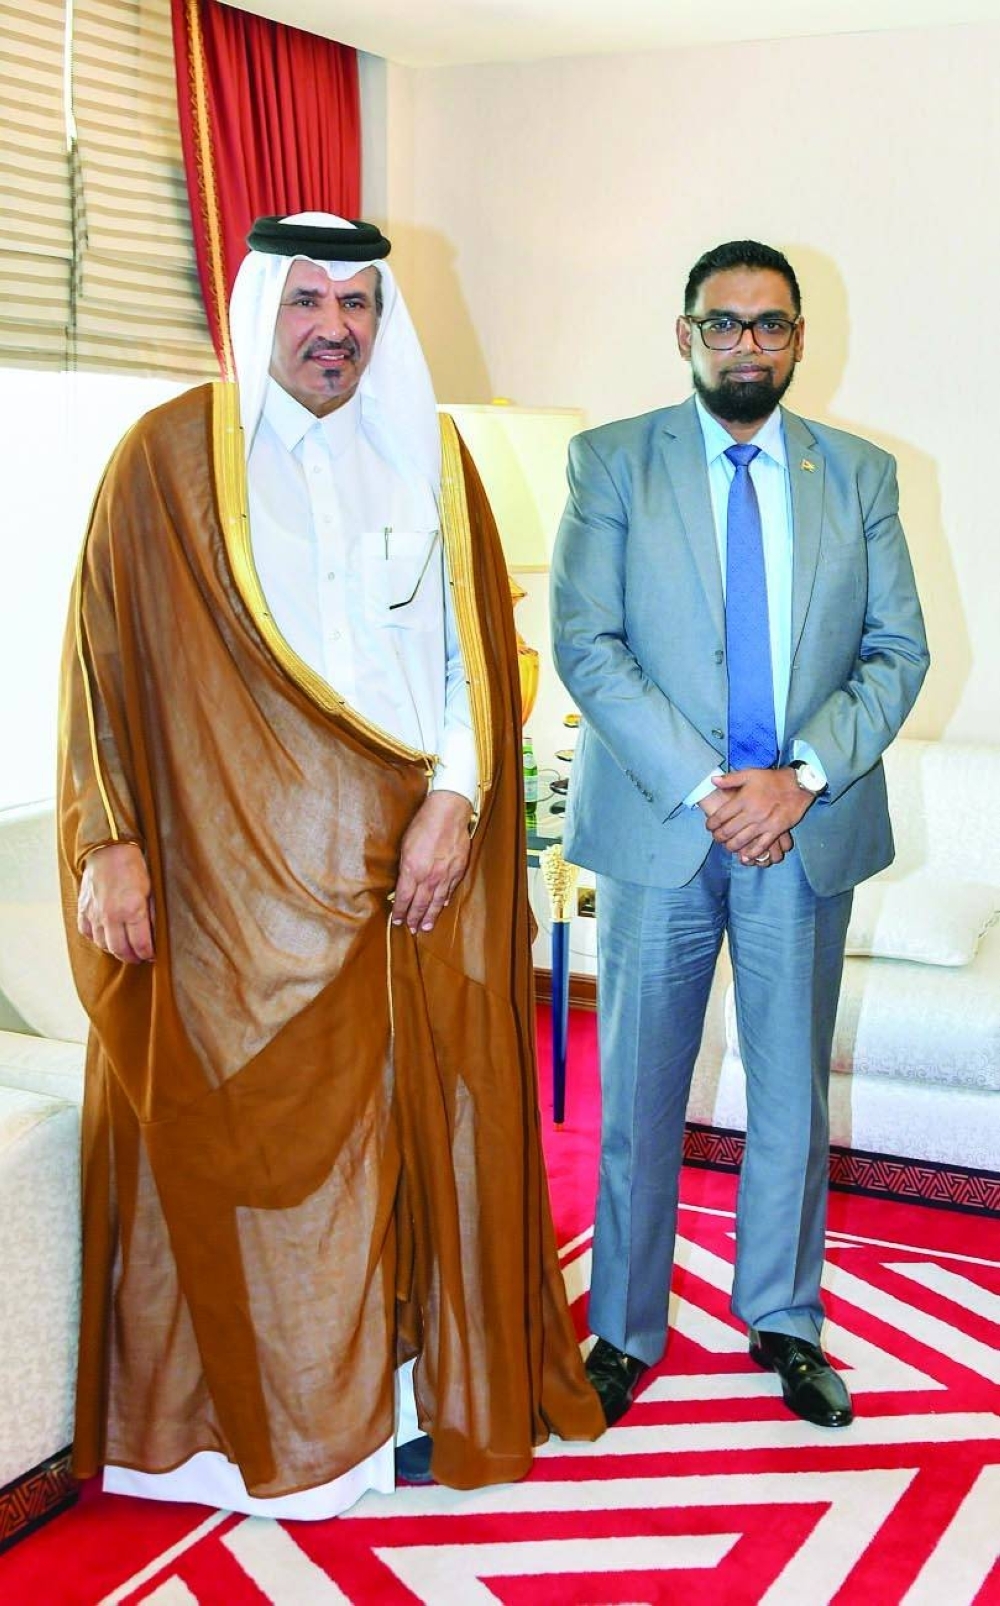 Qatar Chamber first vice-chairman Mohamed bin Towar al-Kuwari and Guyana’s president, Dr Mohamed Irfaan Ali, during a meeting in Doha.